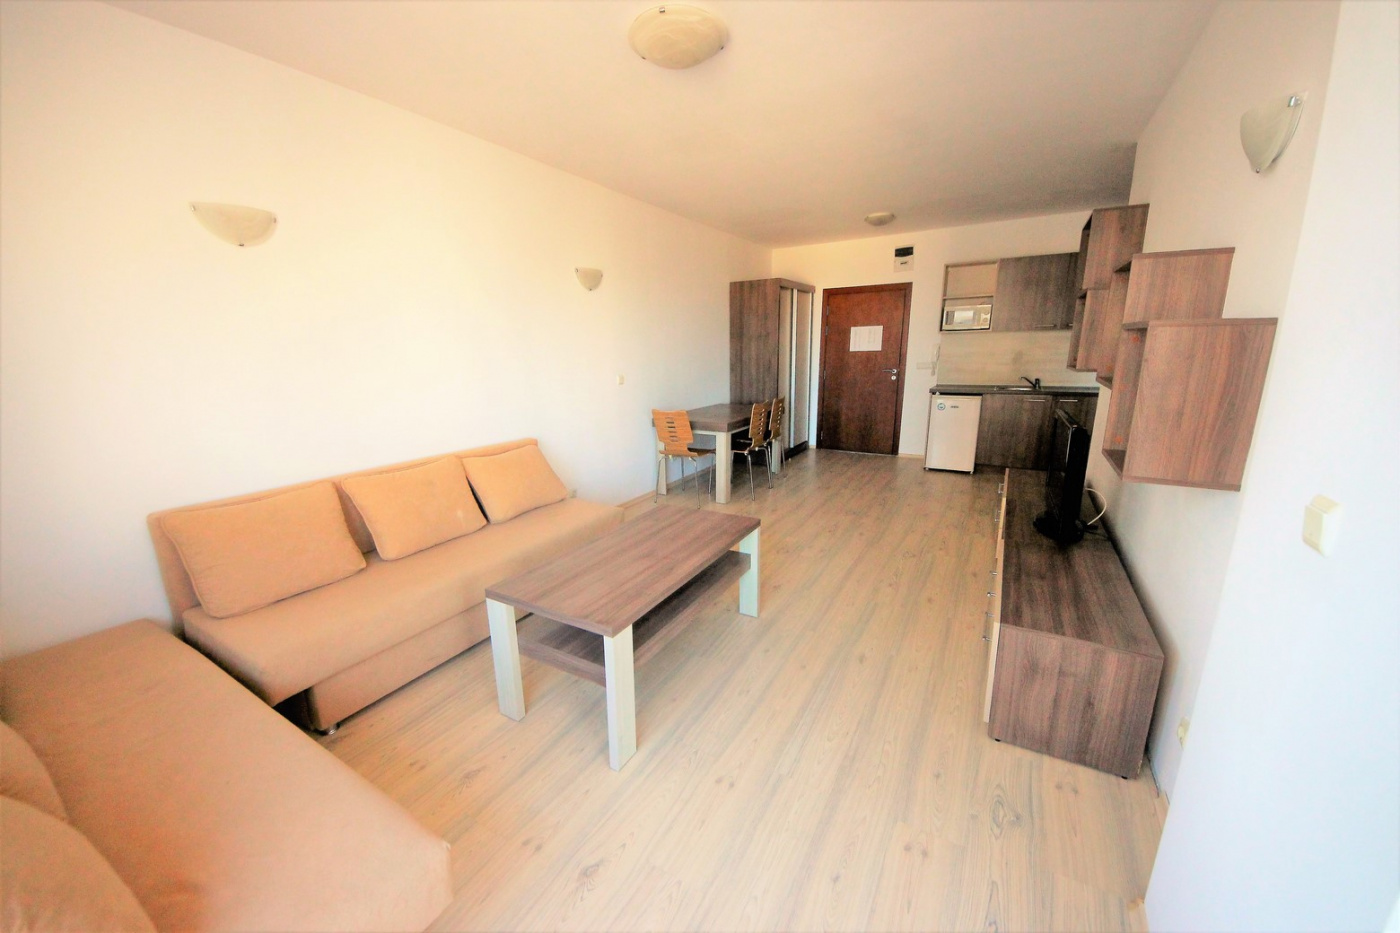 Zornitsa apartment B38